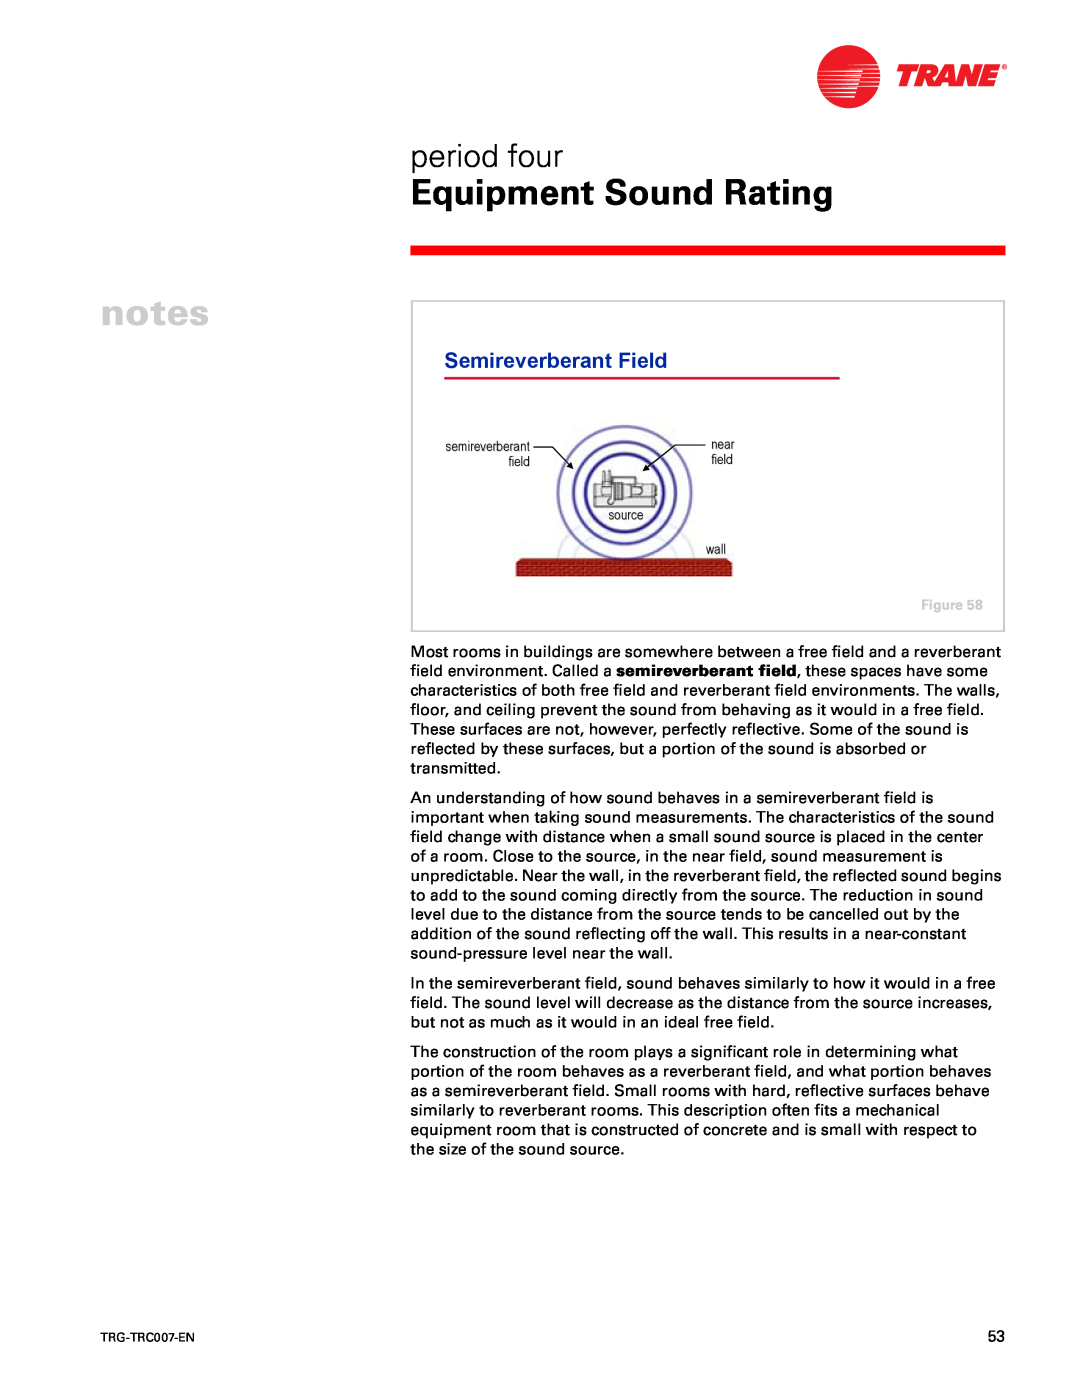 Trane TRG-TRC007-EN manual Semireverberant Field, Equipment Sound Rating, period four 